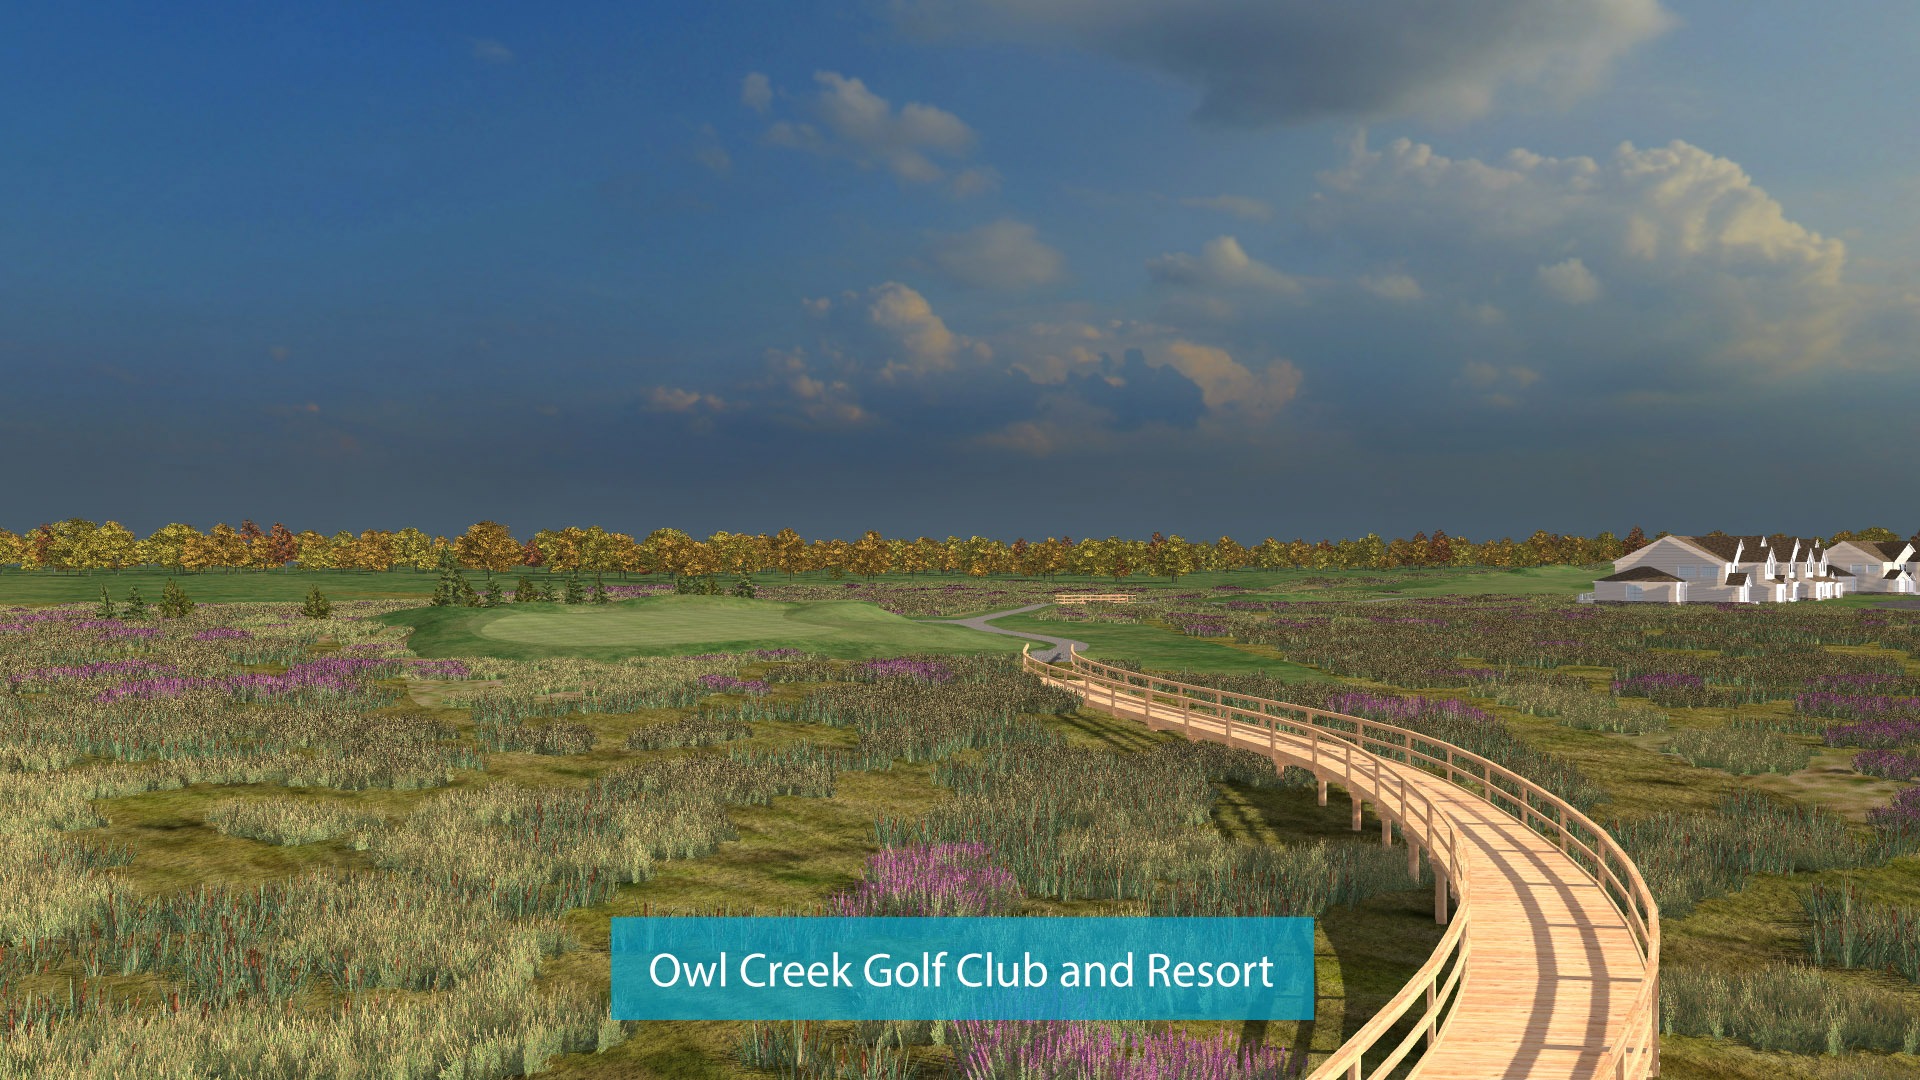 Owl Creek Golf Club and Resort copy